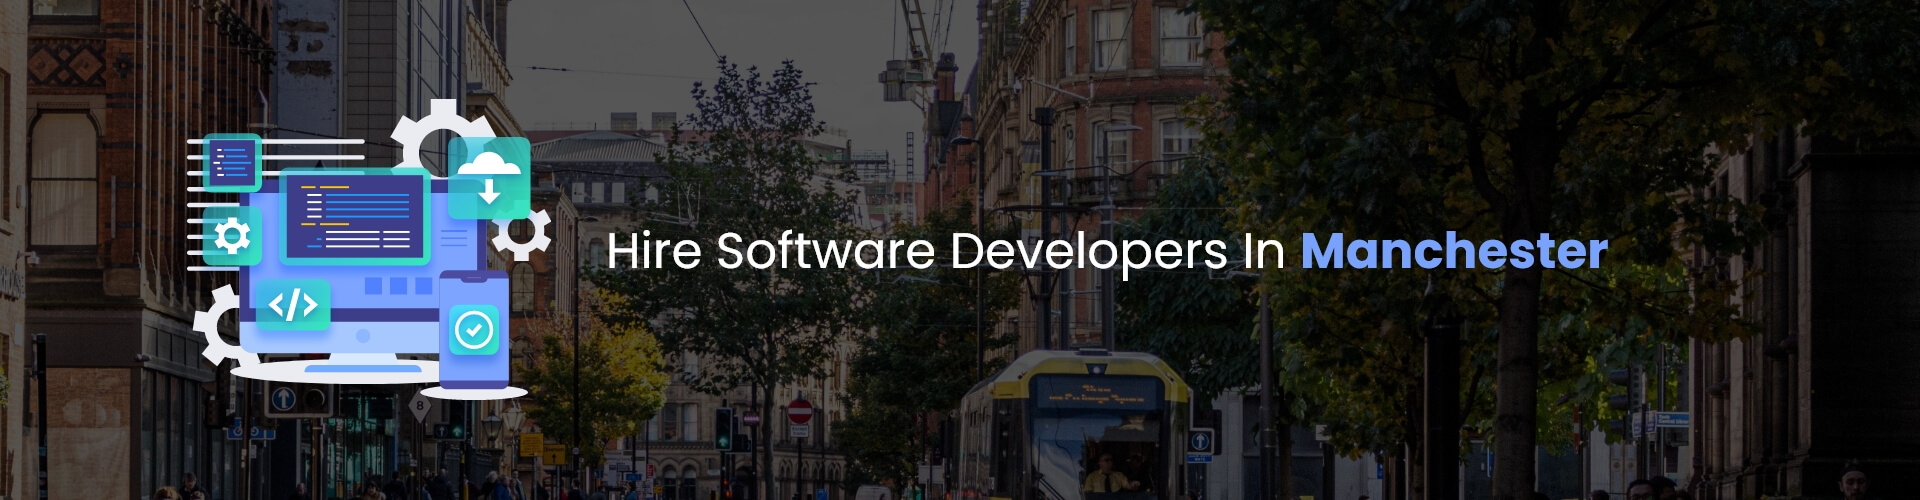 hire software developers in manhattan